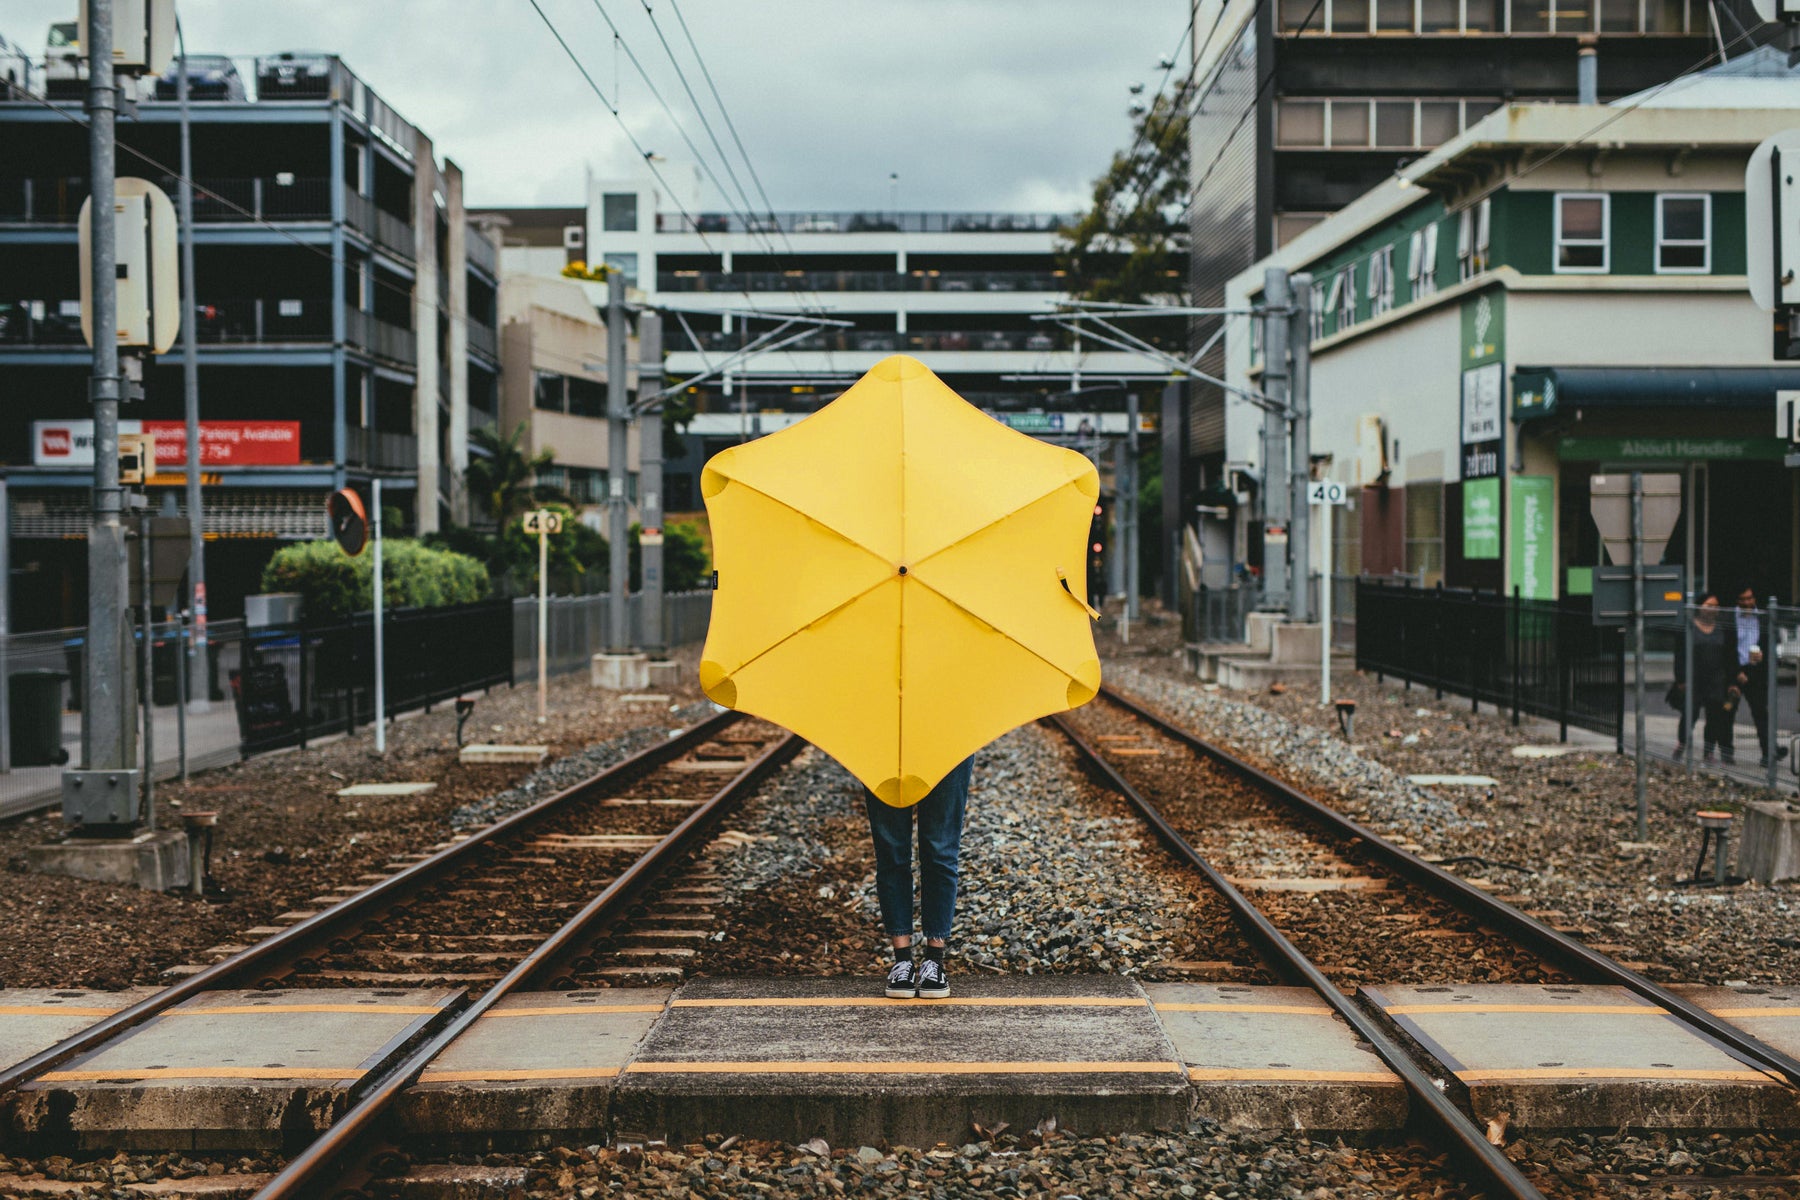 The Blunt Umbrella Range, The World's Best Umbrellas